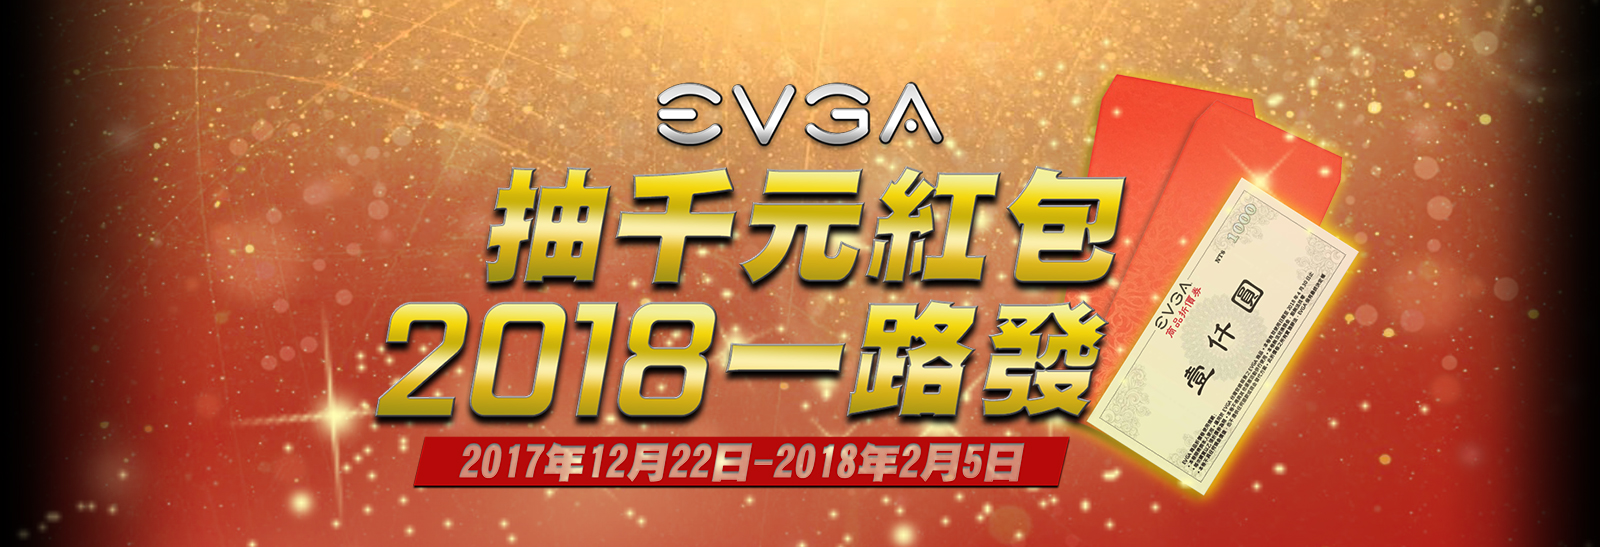 EVGA Promotion